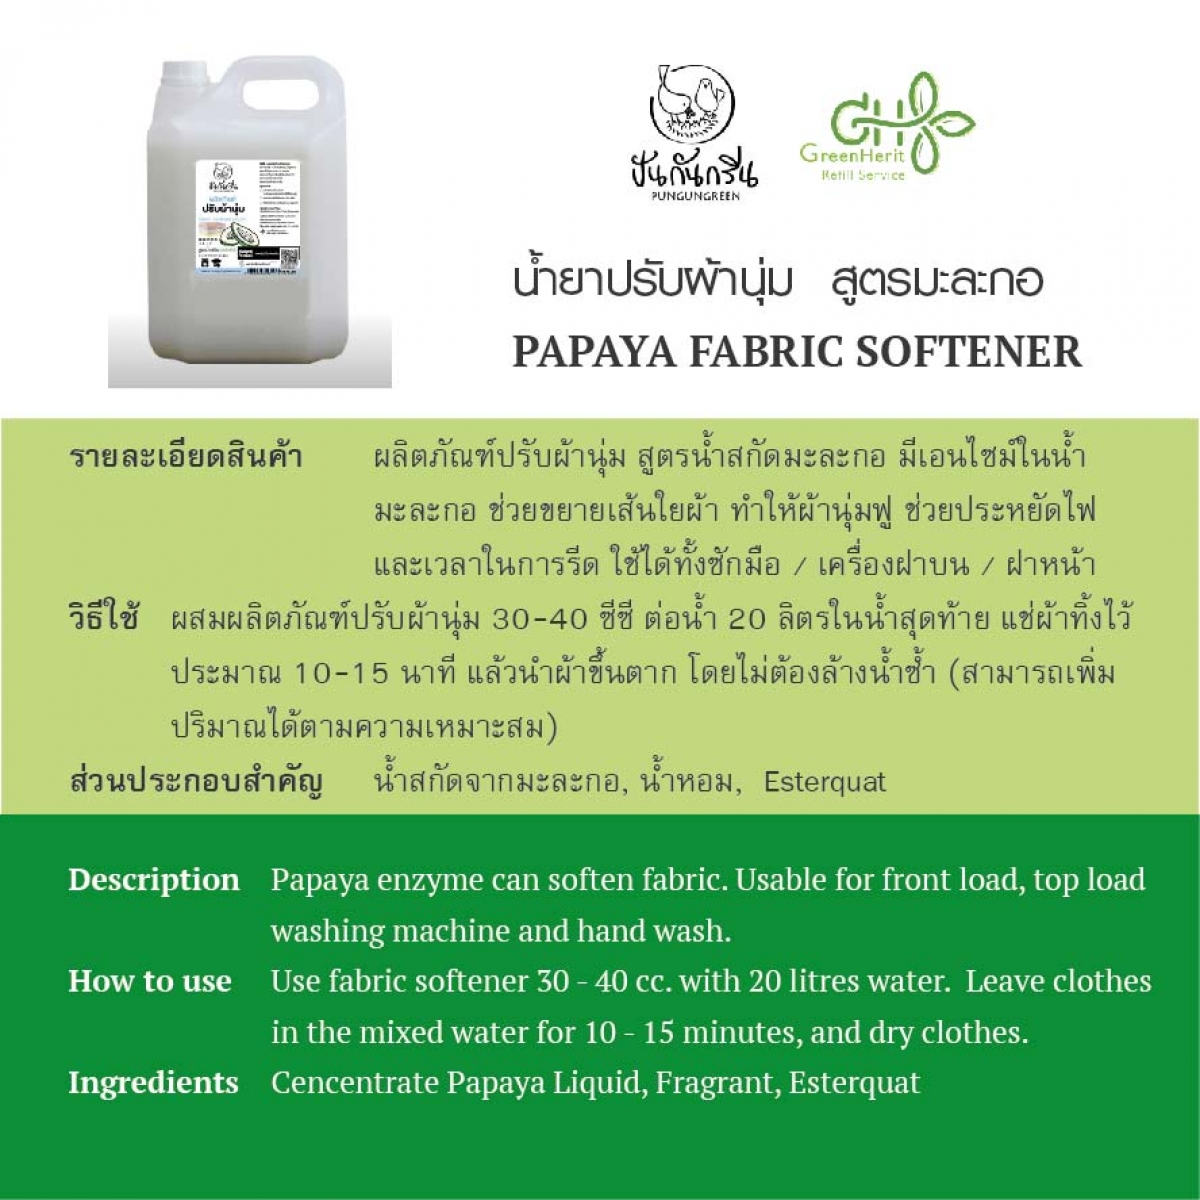 Organic Product > Papaya Fabric Softener